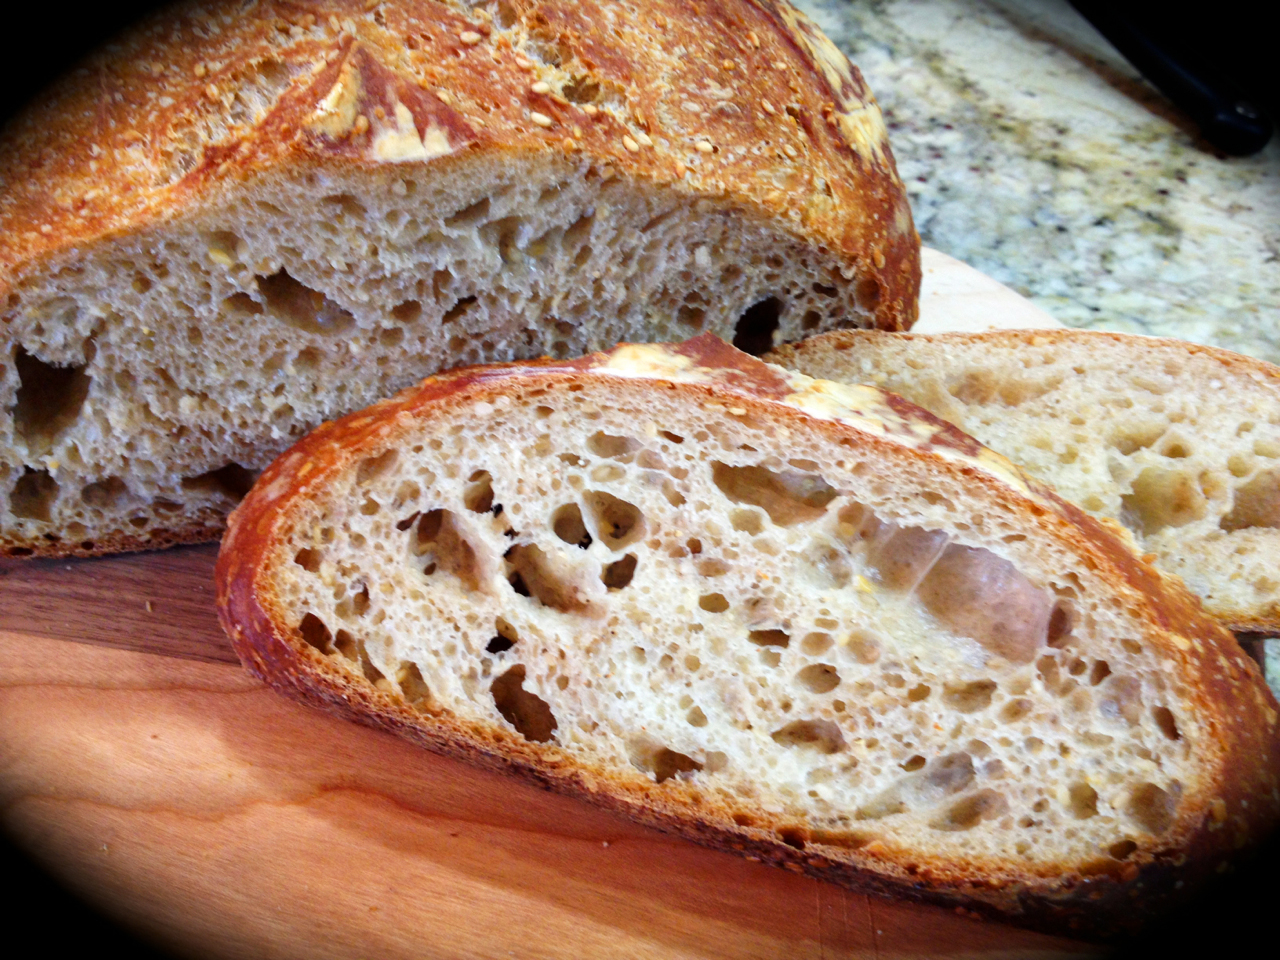 josey baker bread 面包甜点 手工制作旧金山最好的老面包 直线距离